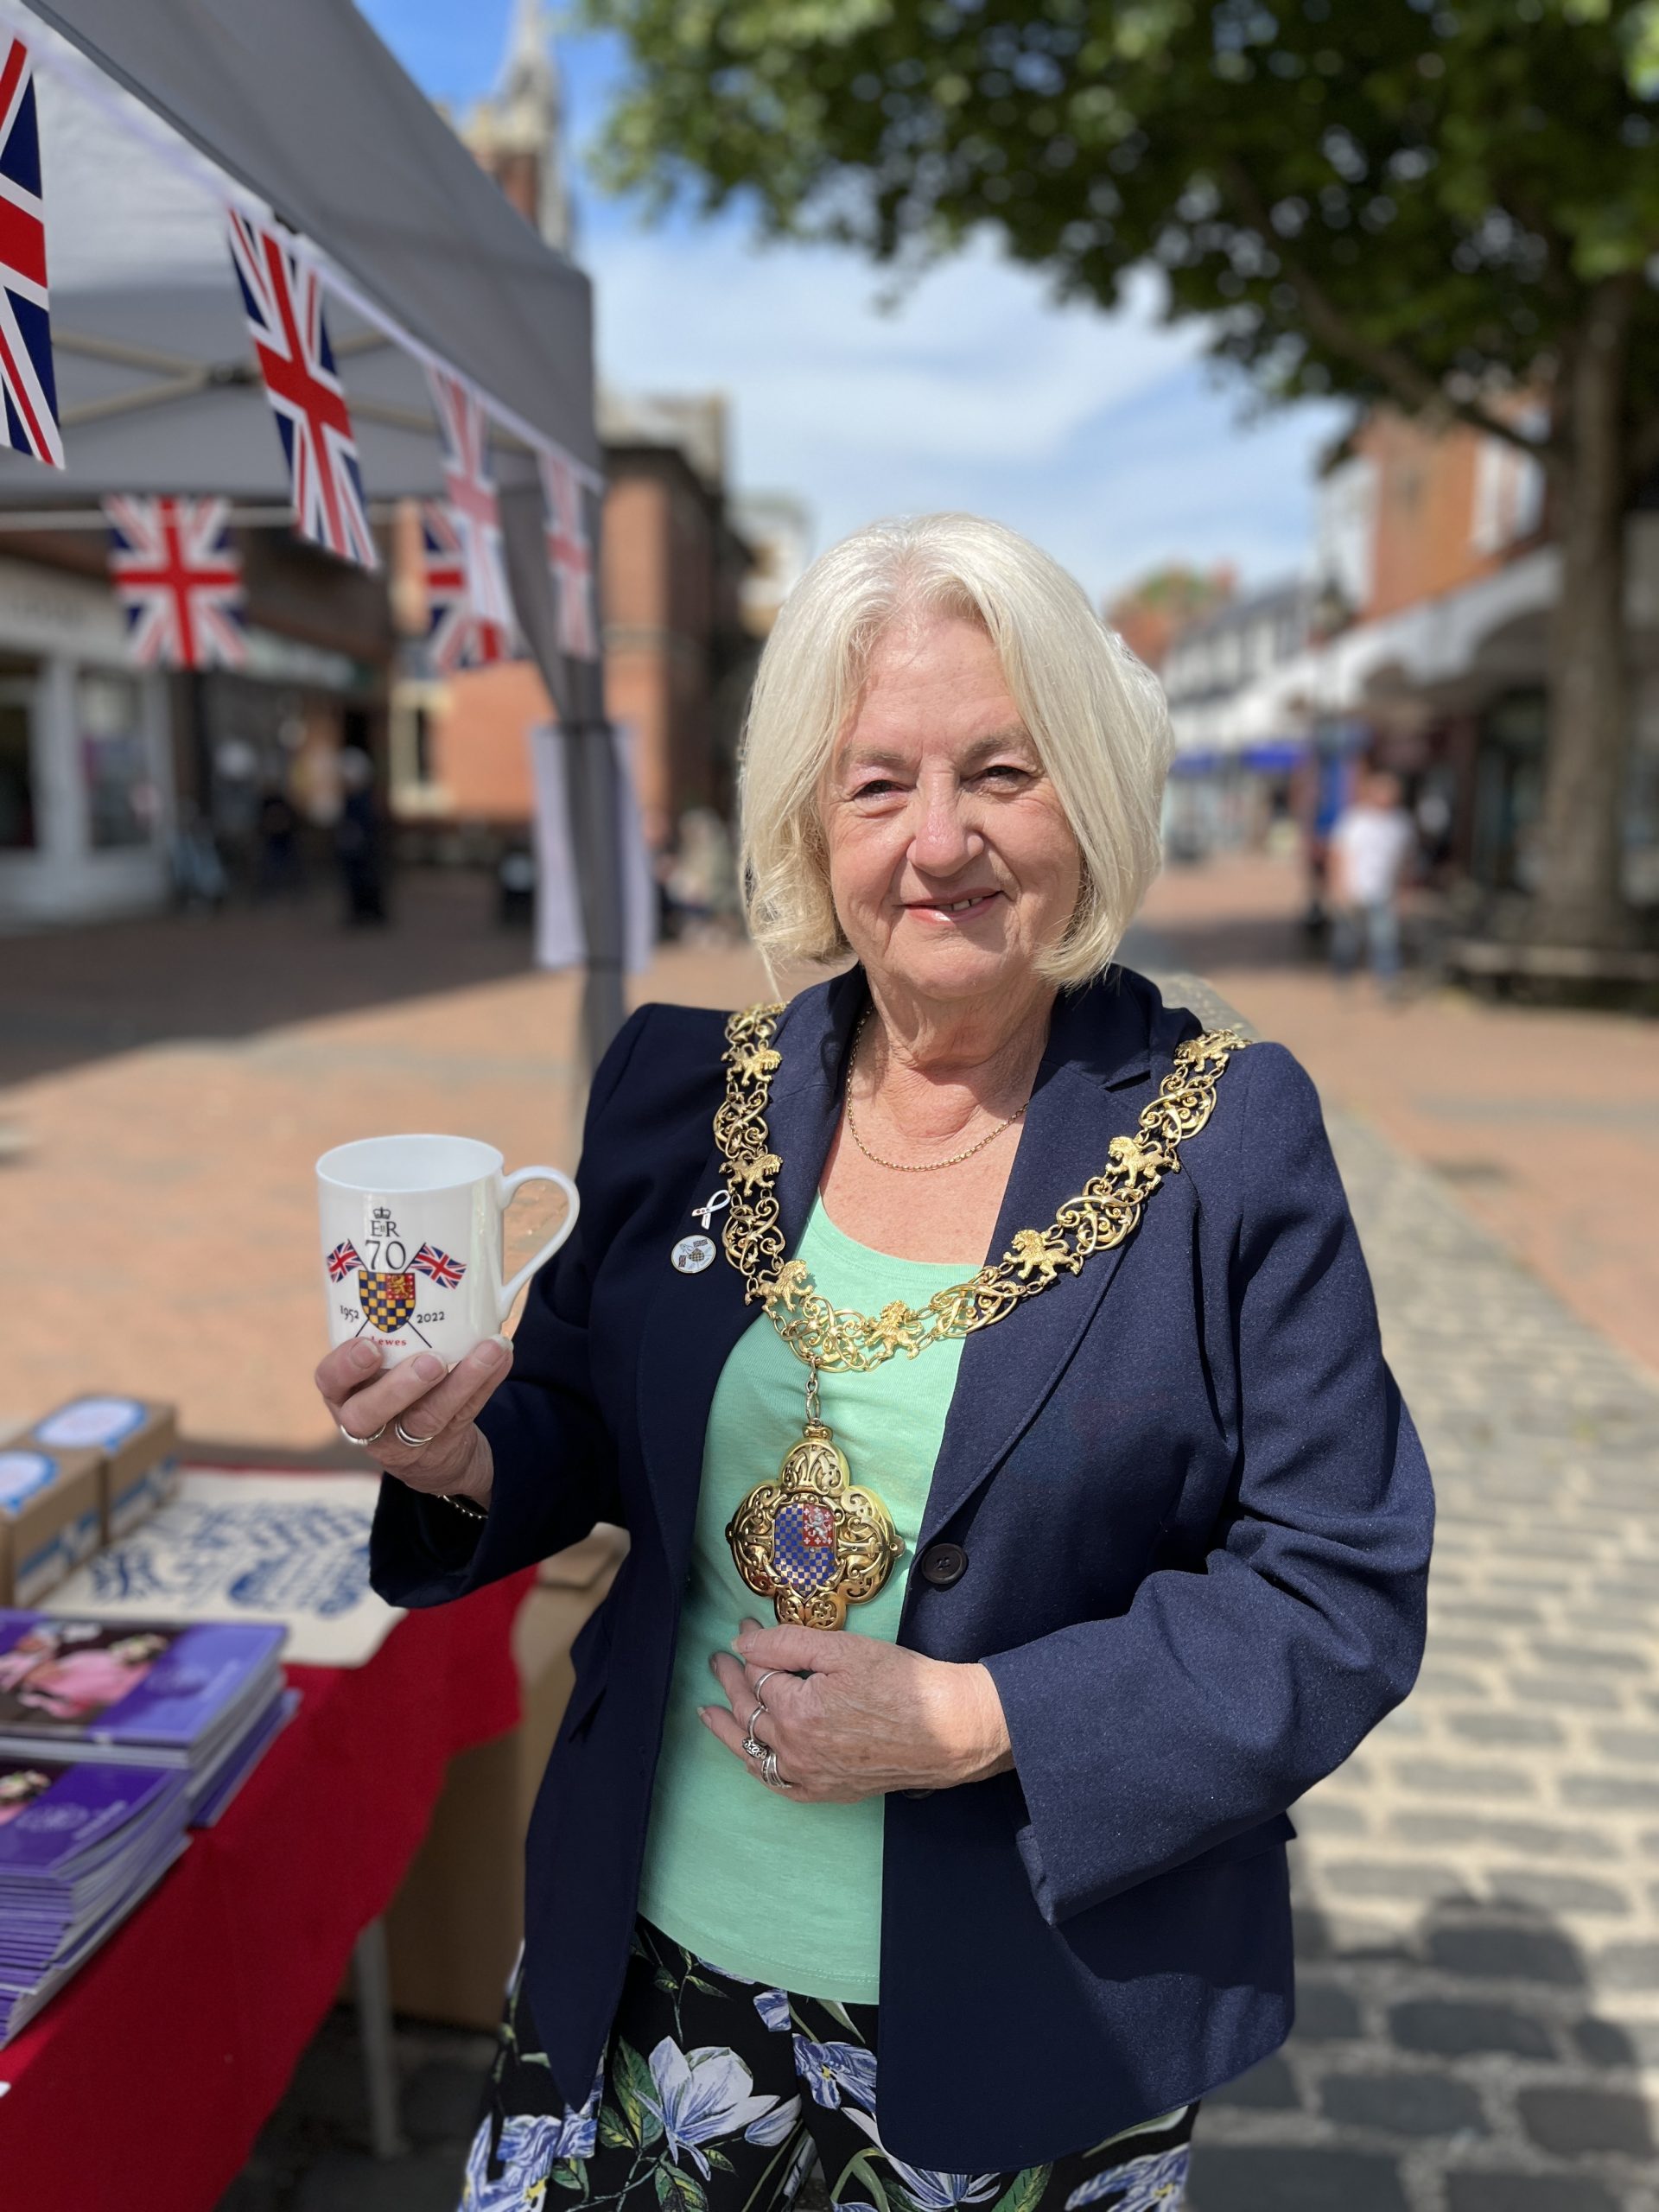 The Mayor Shirley Sains with a Jubilee souvenir mug